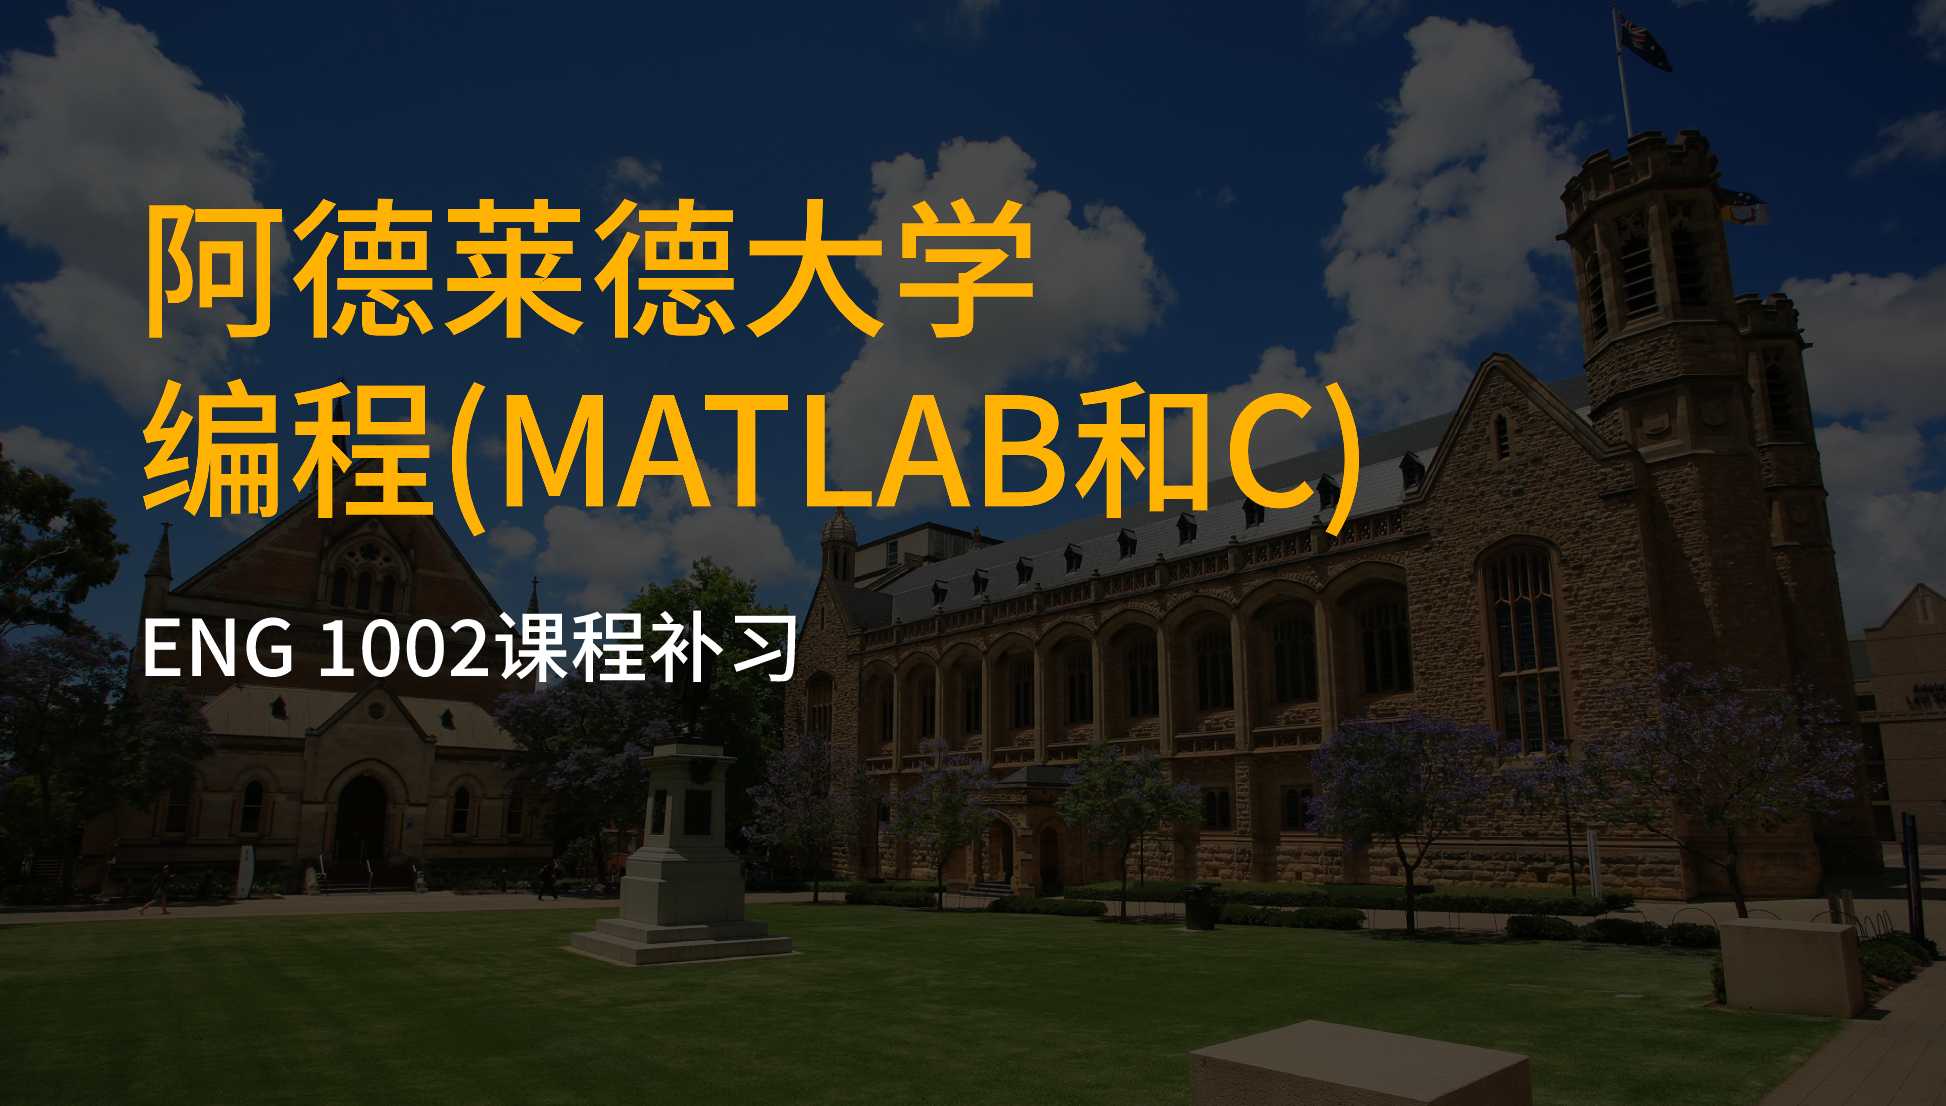 阿德莱德大学ENG 1002 Programming (Matlab and C)编程(Matlab和C)课程补习